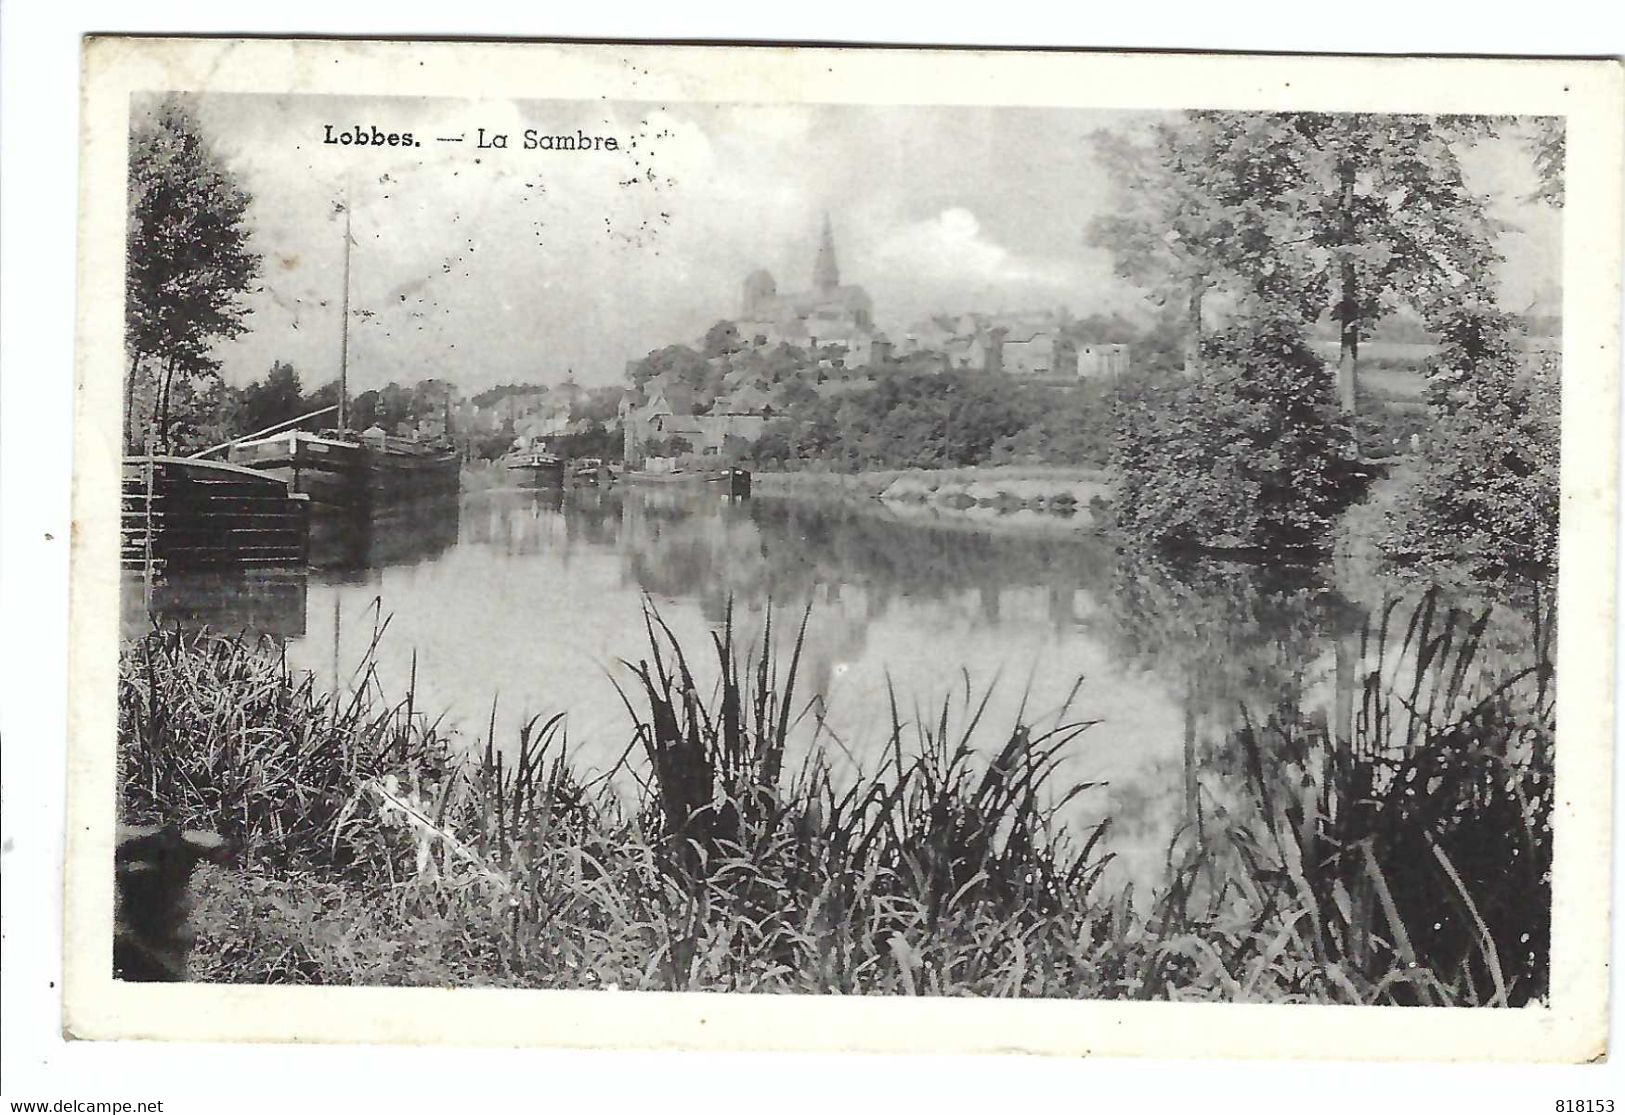 Lobbes - La Sambre 1949 - Lobbes